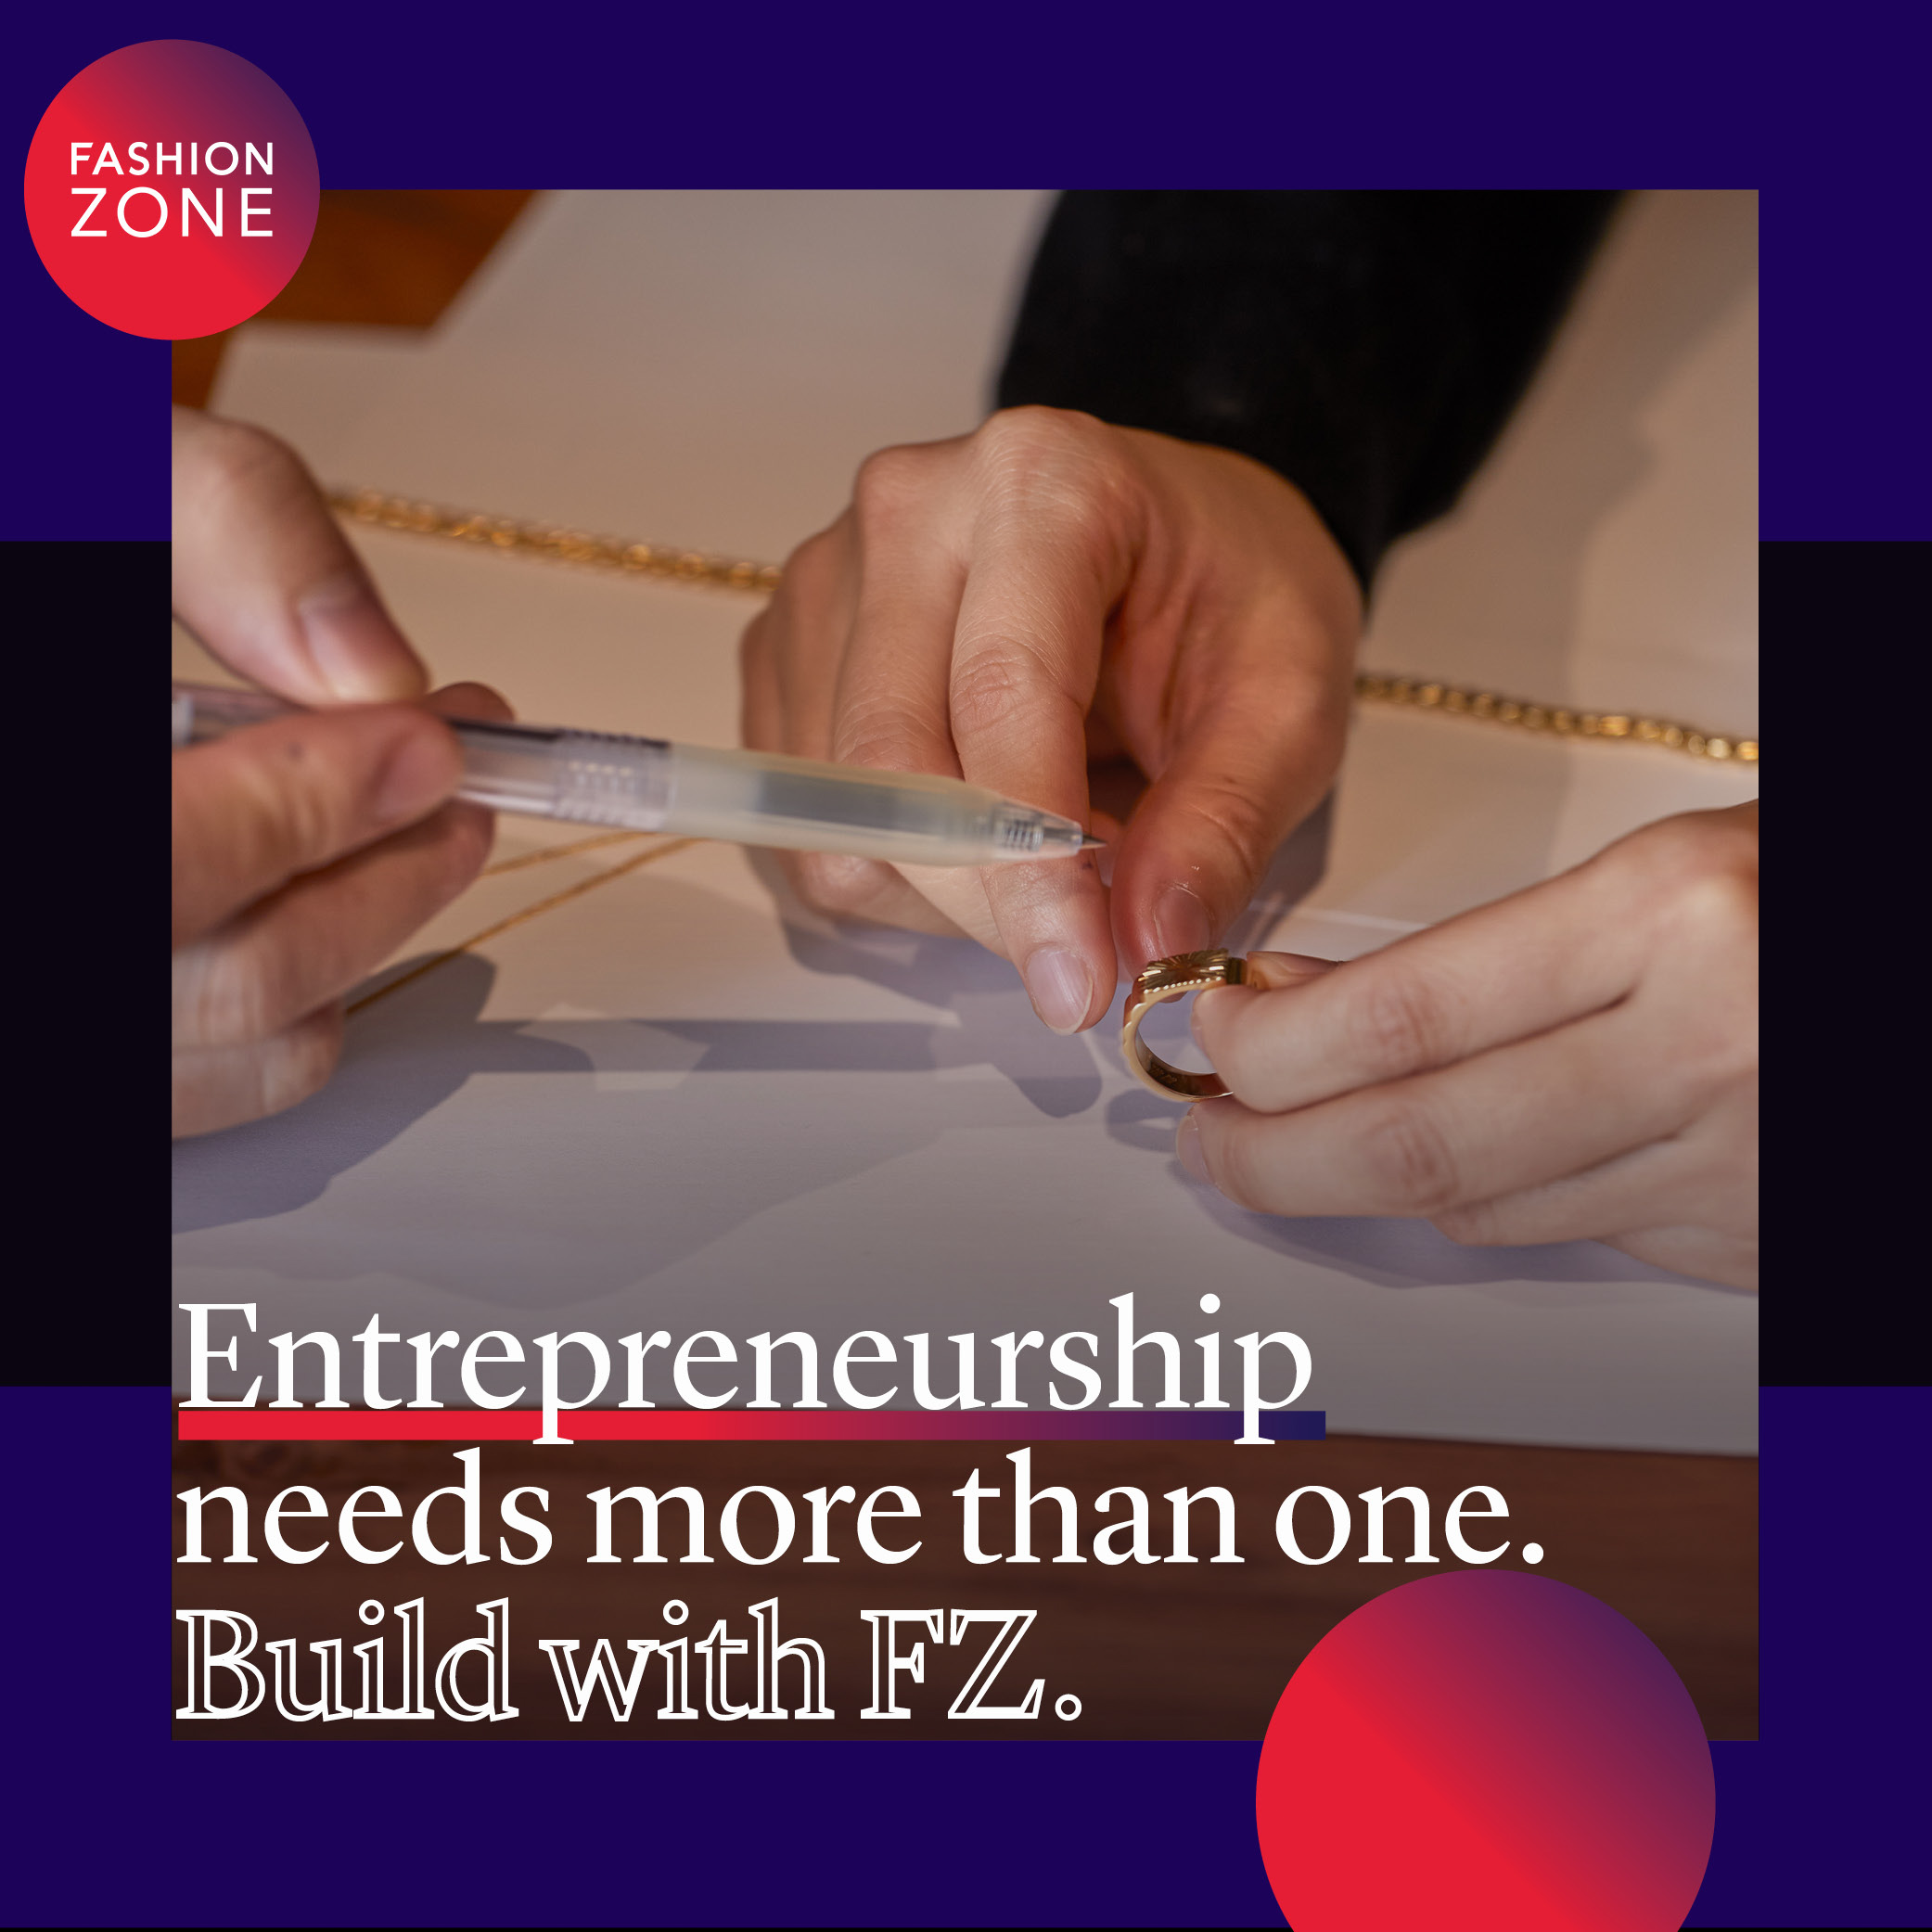 FZ Summer recruitment - quote "Entrepreneurship needs more than one."